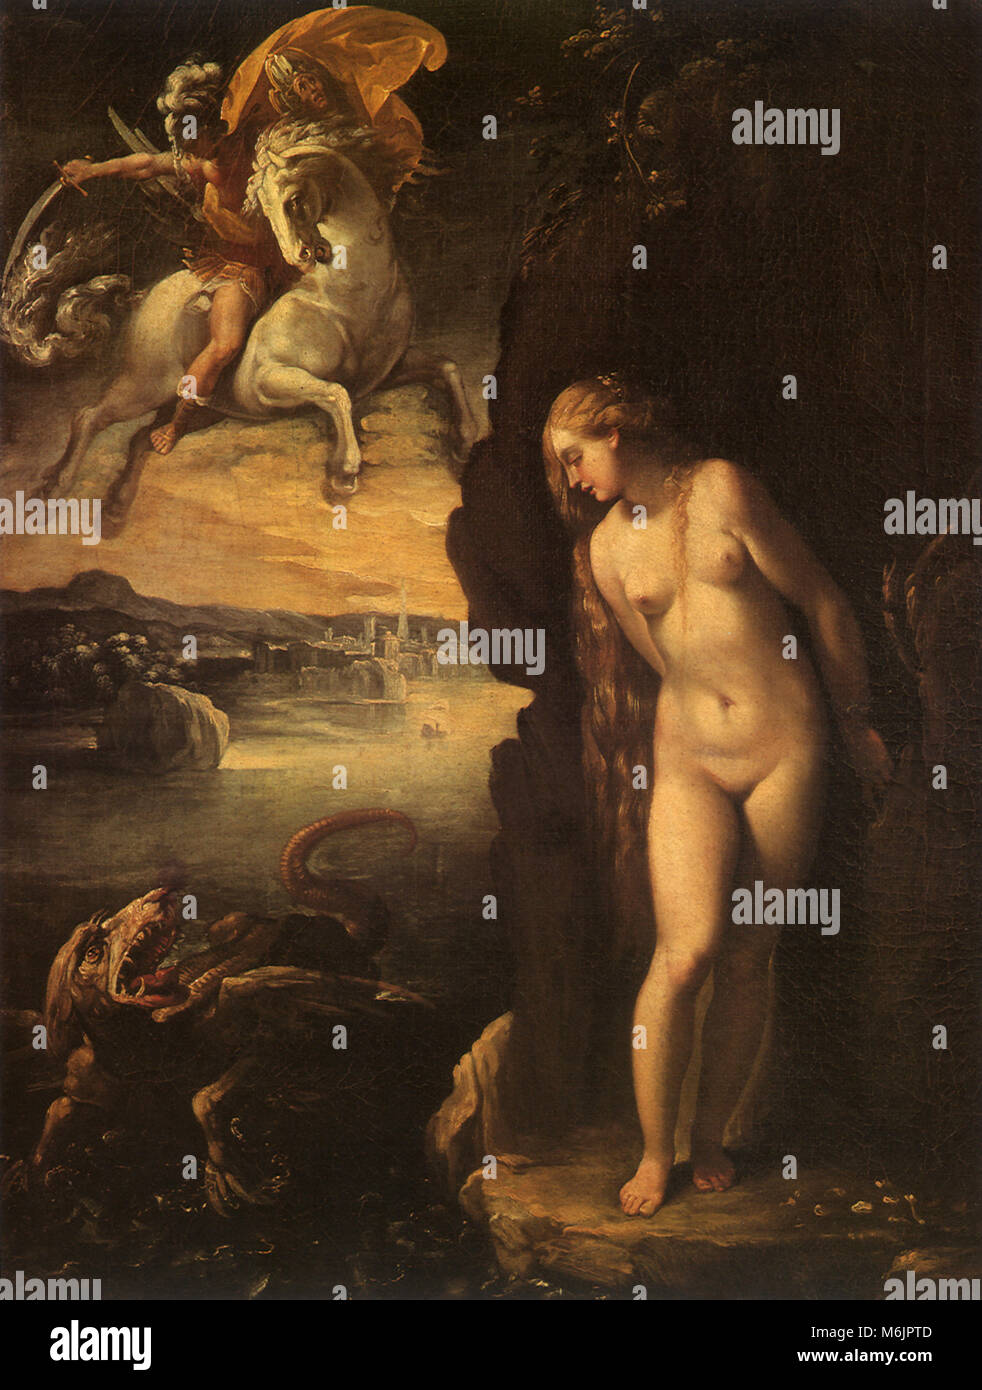 Rescue of Andromeda, Cesari, Giuseppe, 1602. Stock Photo